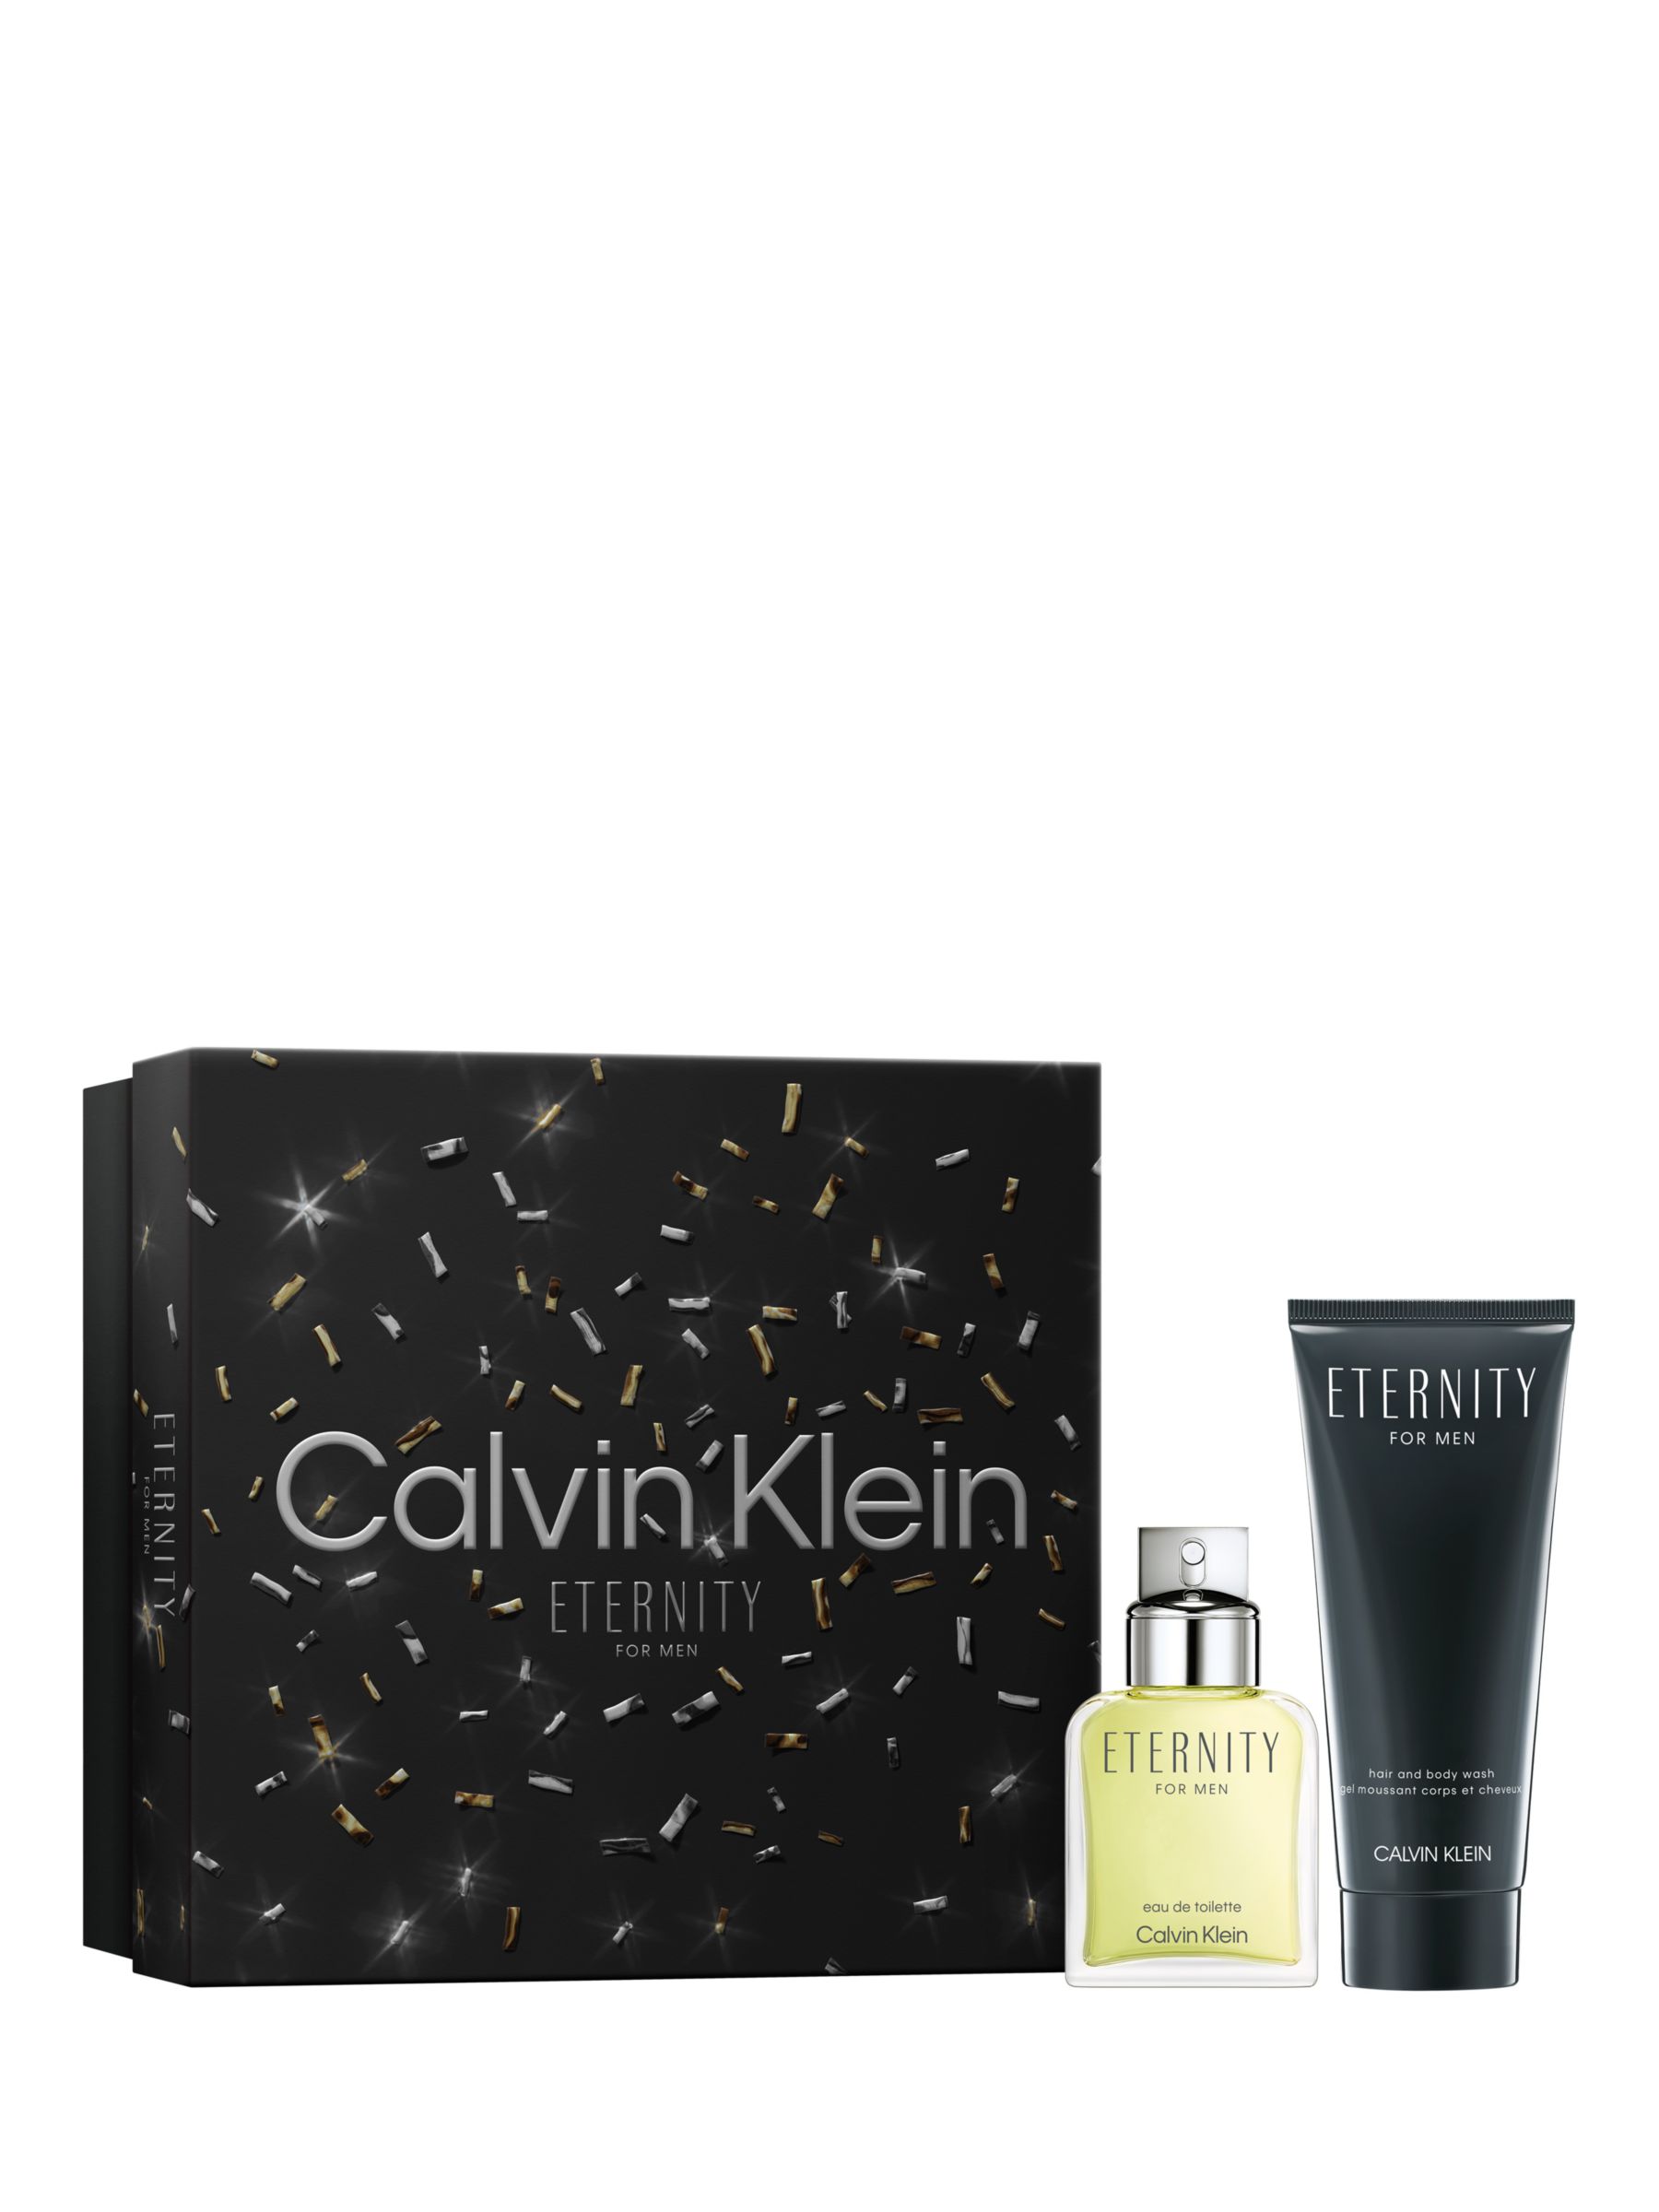 Calvin Klein Eternity for Men Eau de Toilette 50ml Fragrance Gift Set